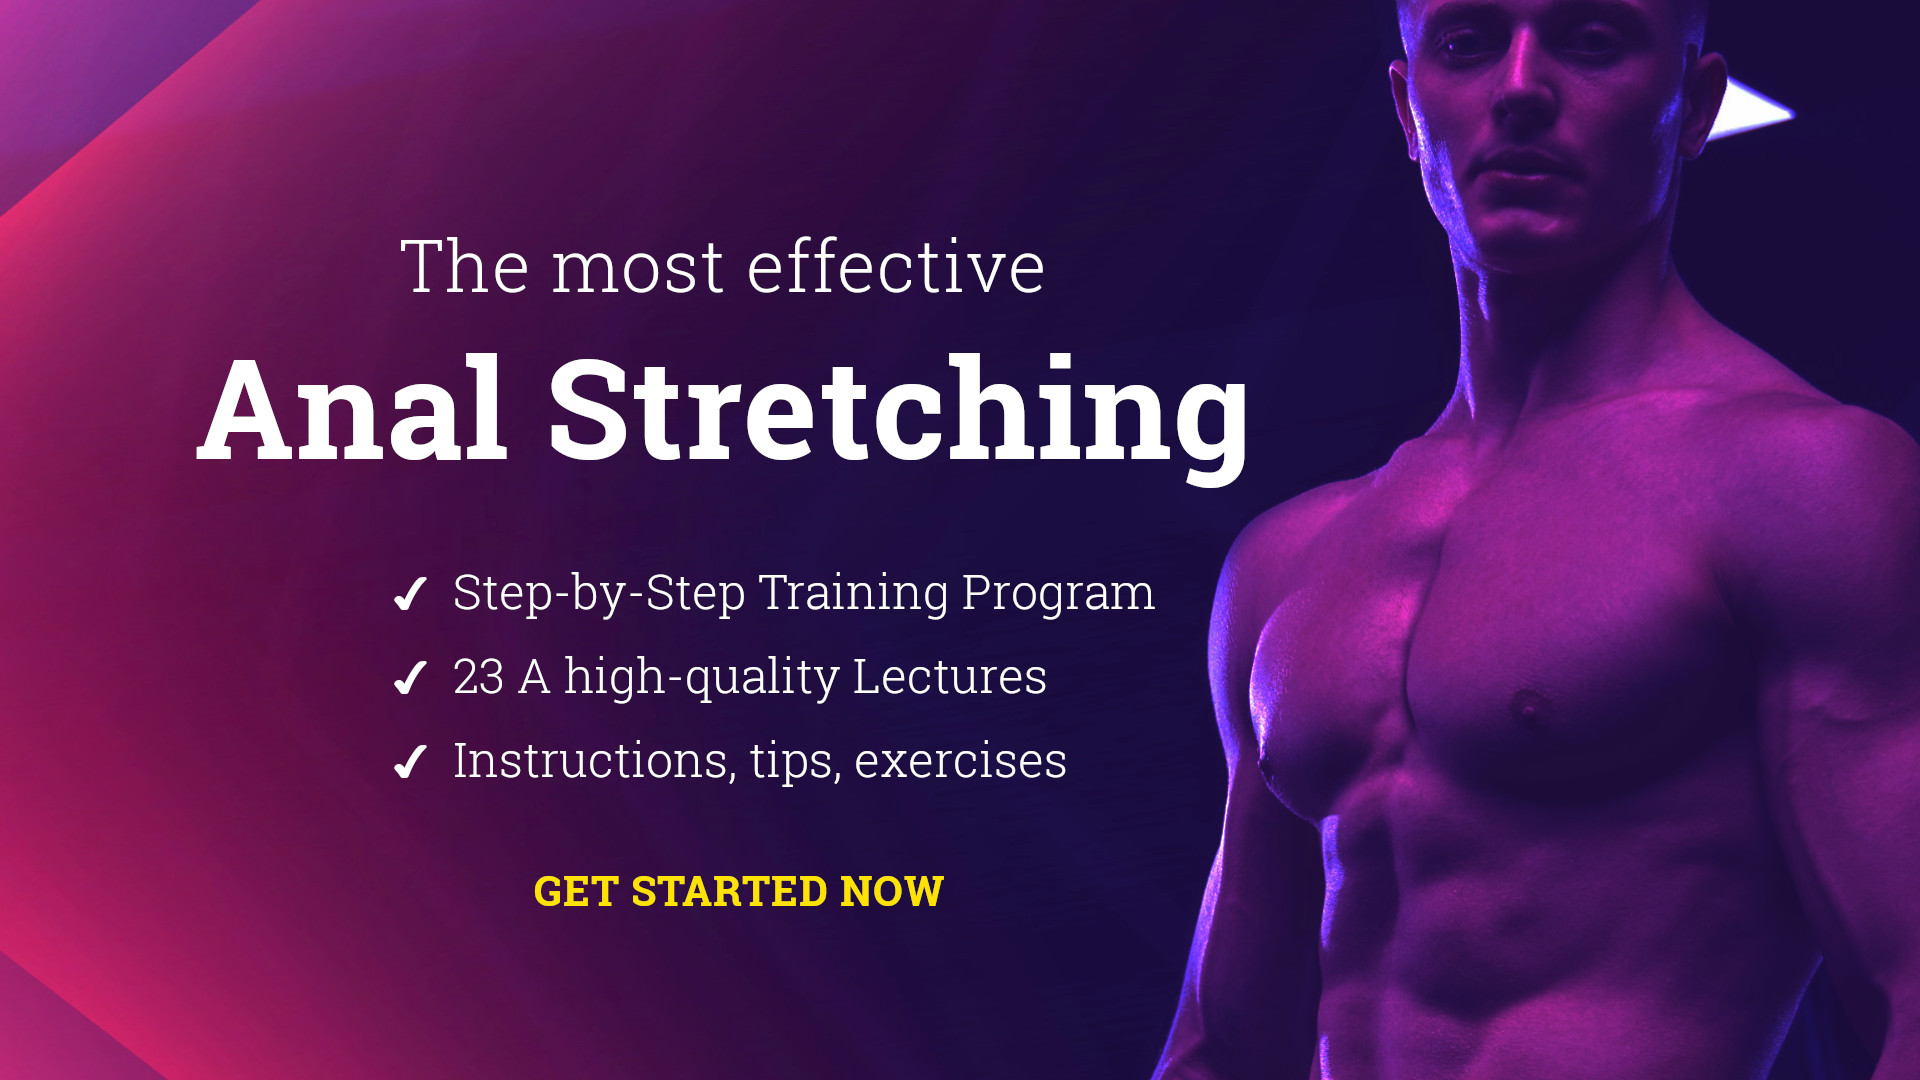 Anal stretching training